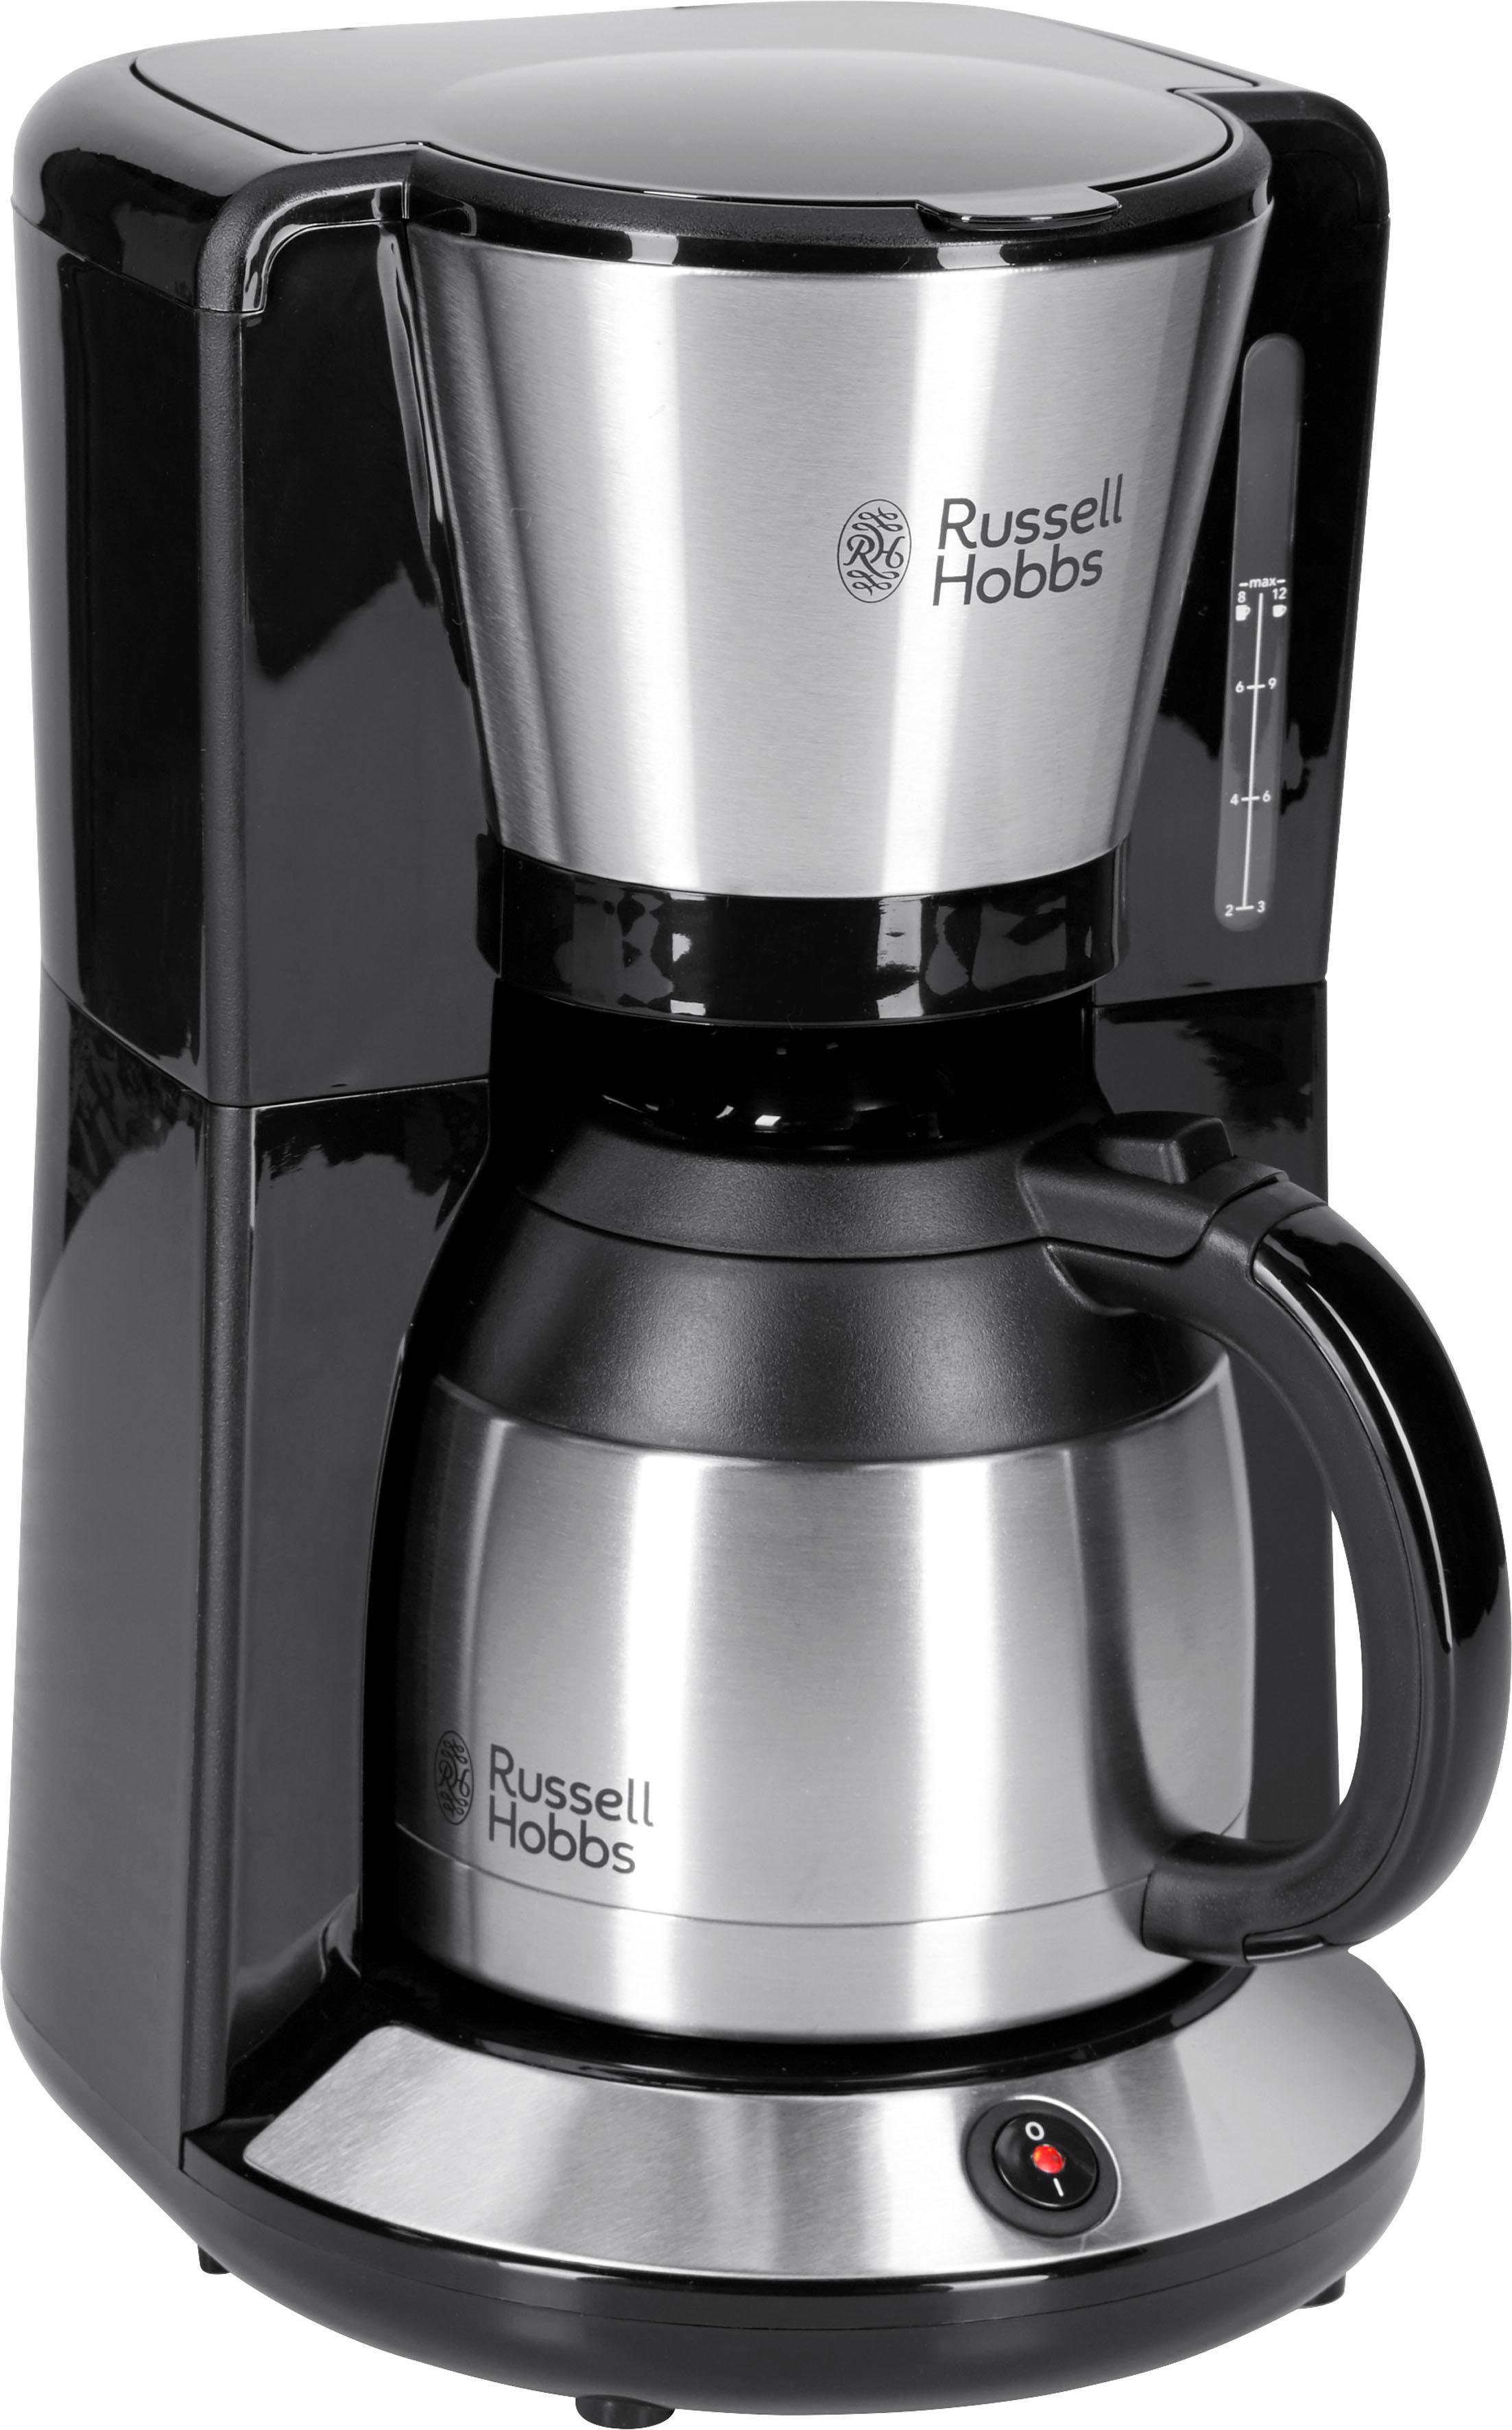 RUSSELL HOBBS Filterkaffeemaschine Adventure 24020-56, 1l Kaffeekanne,  Papierfilter 1x4, mit Thermokanne, 1100 Watt, Edelstahl gebürstet